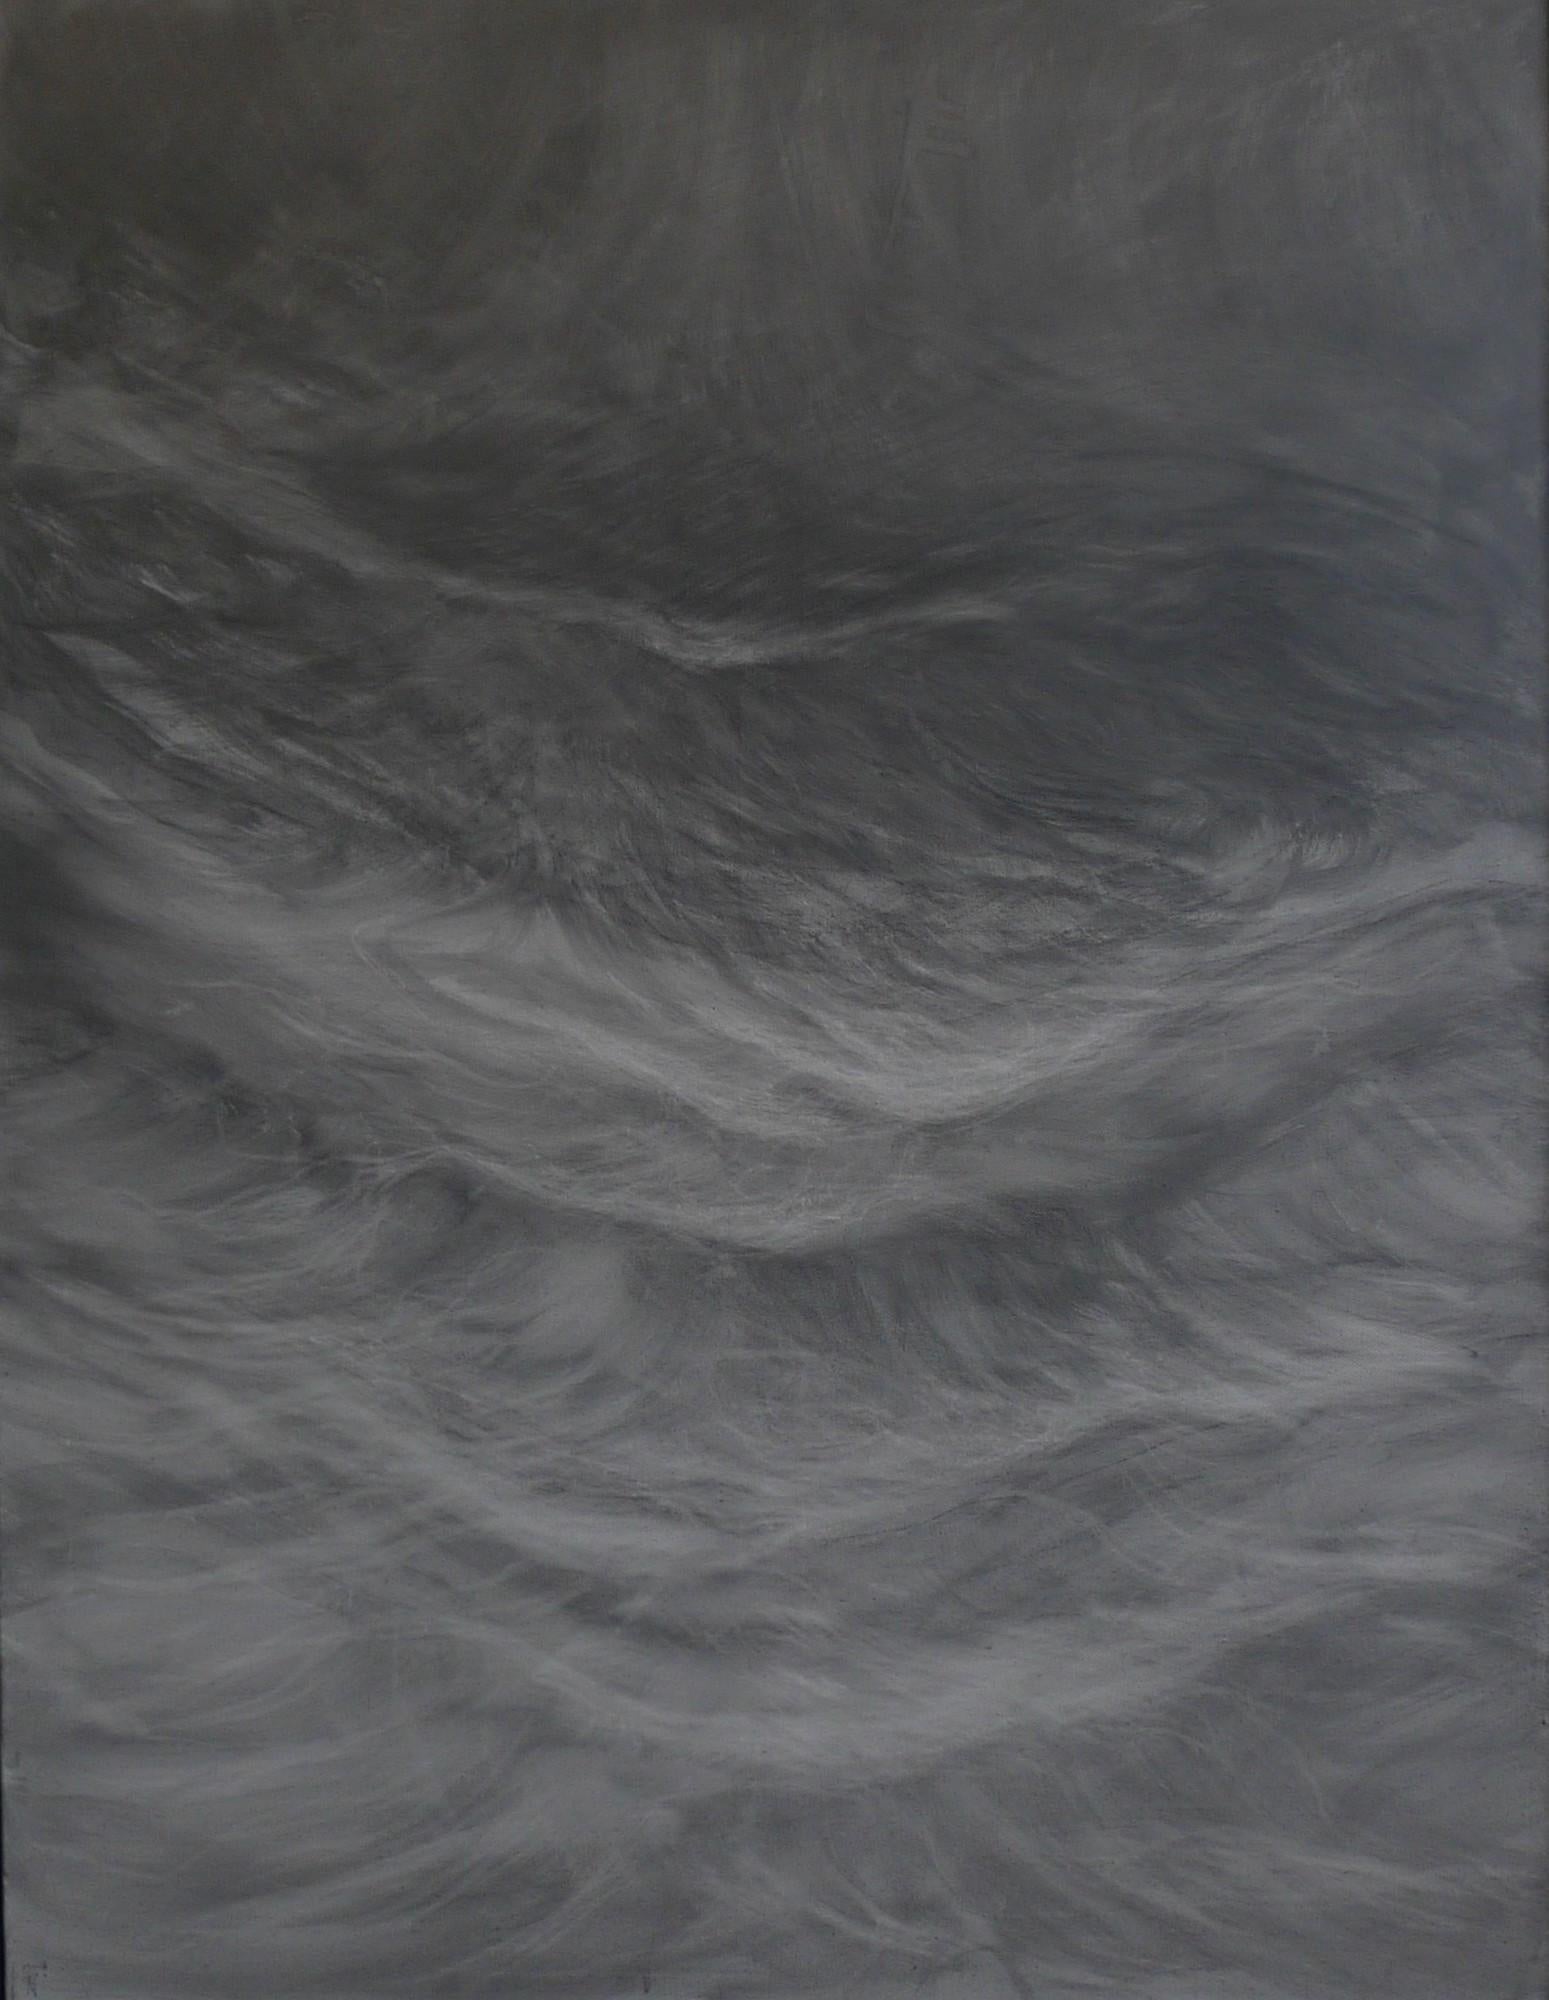 Waves by Franco Salas Borquez - Contemporary seascape painting, ocean, dark tone For Sale 2